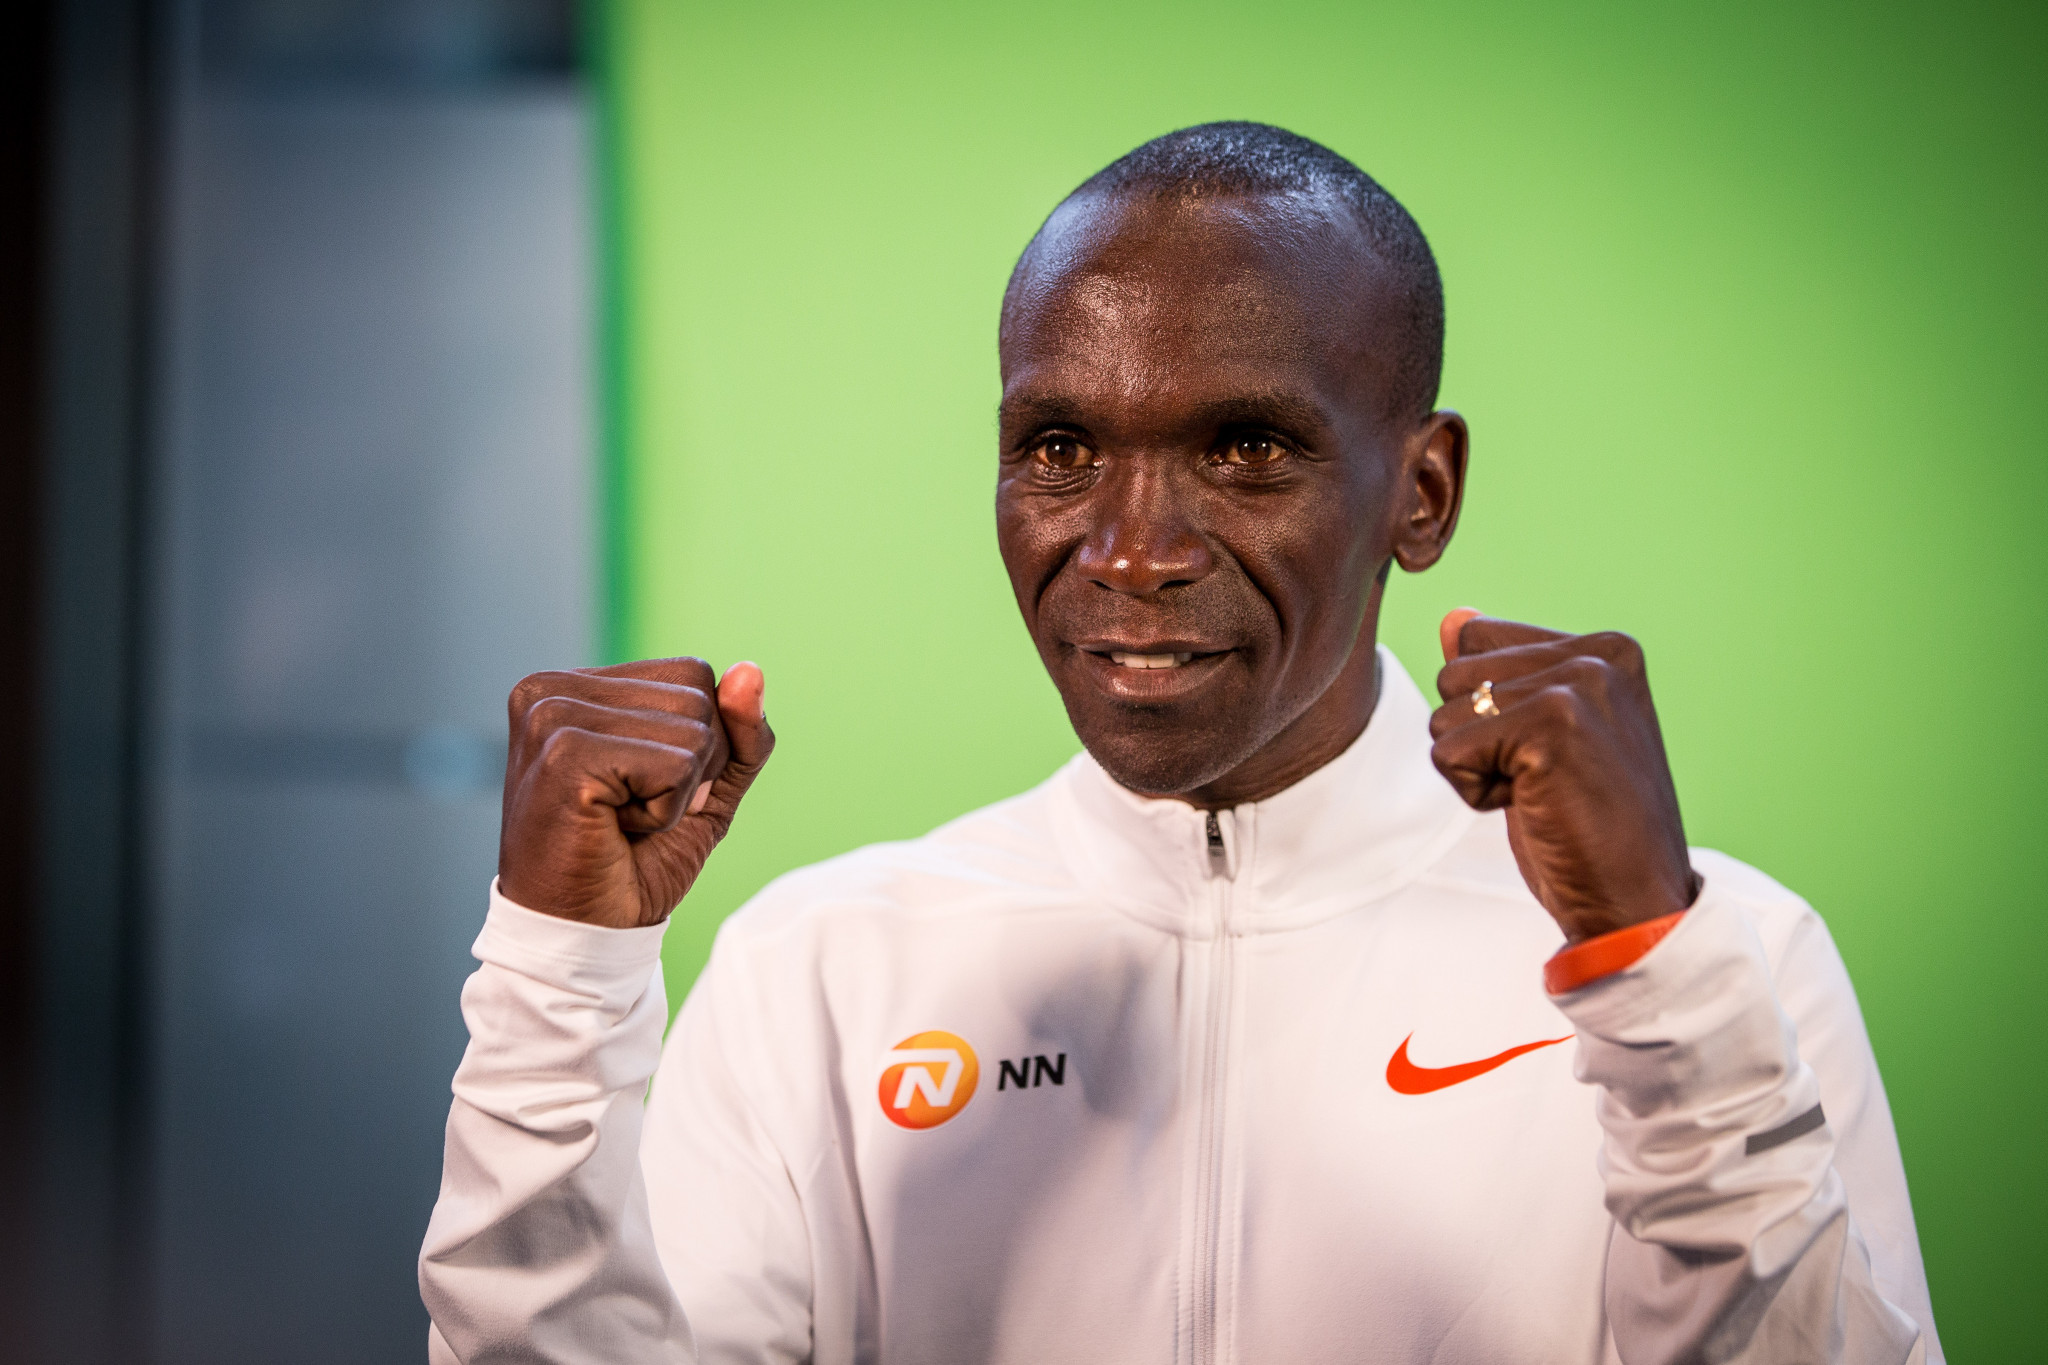 Kipchoge and Dibaba targeting world records at Berlin Marathon